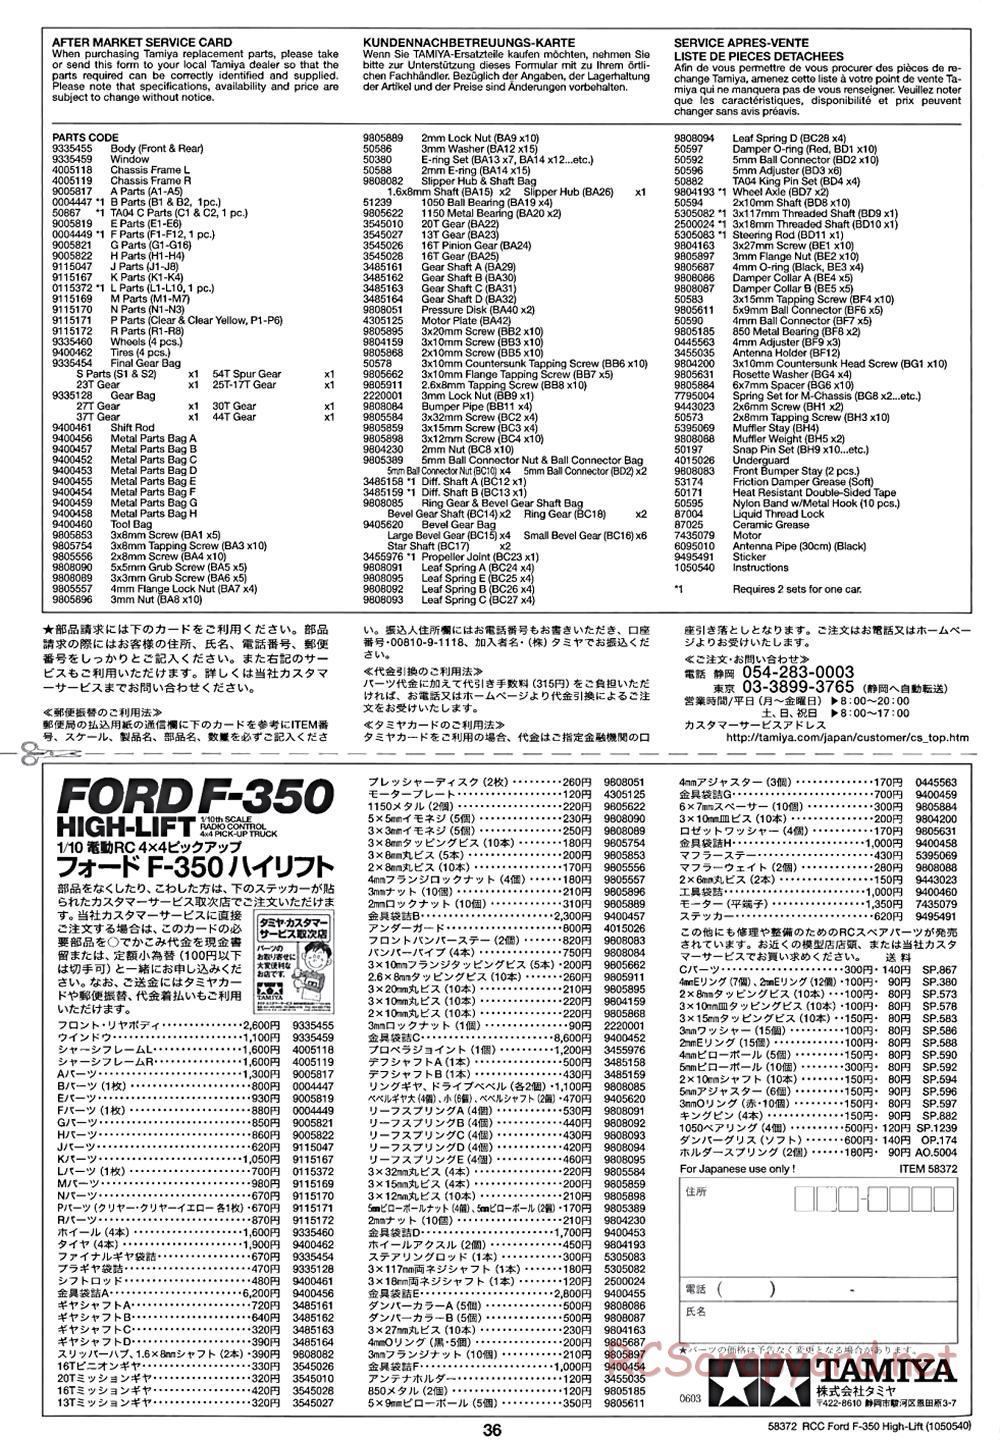 Tamiya - Ford F350 High-Lift Chassis - Manual - Page 36